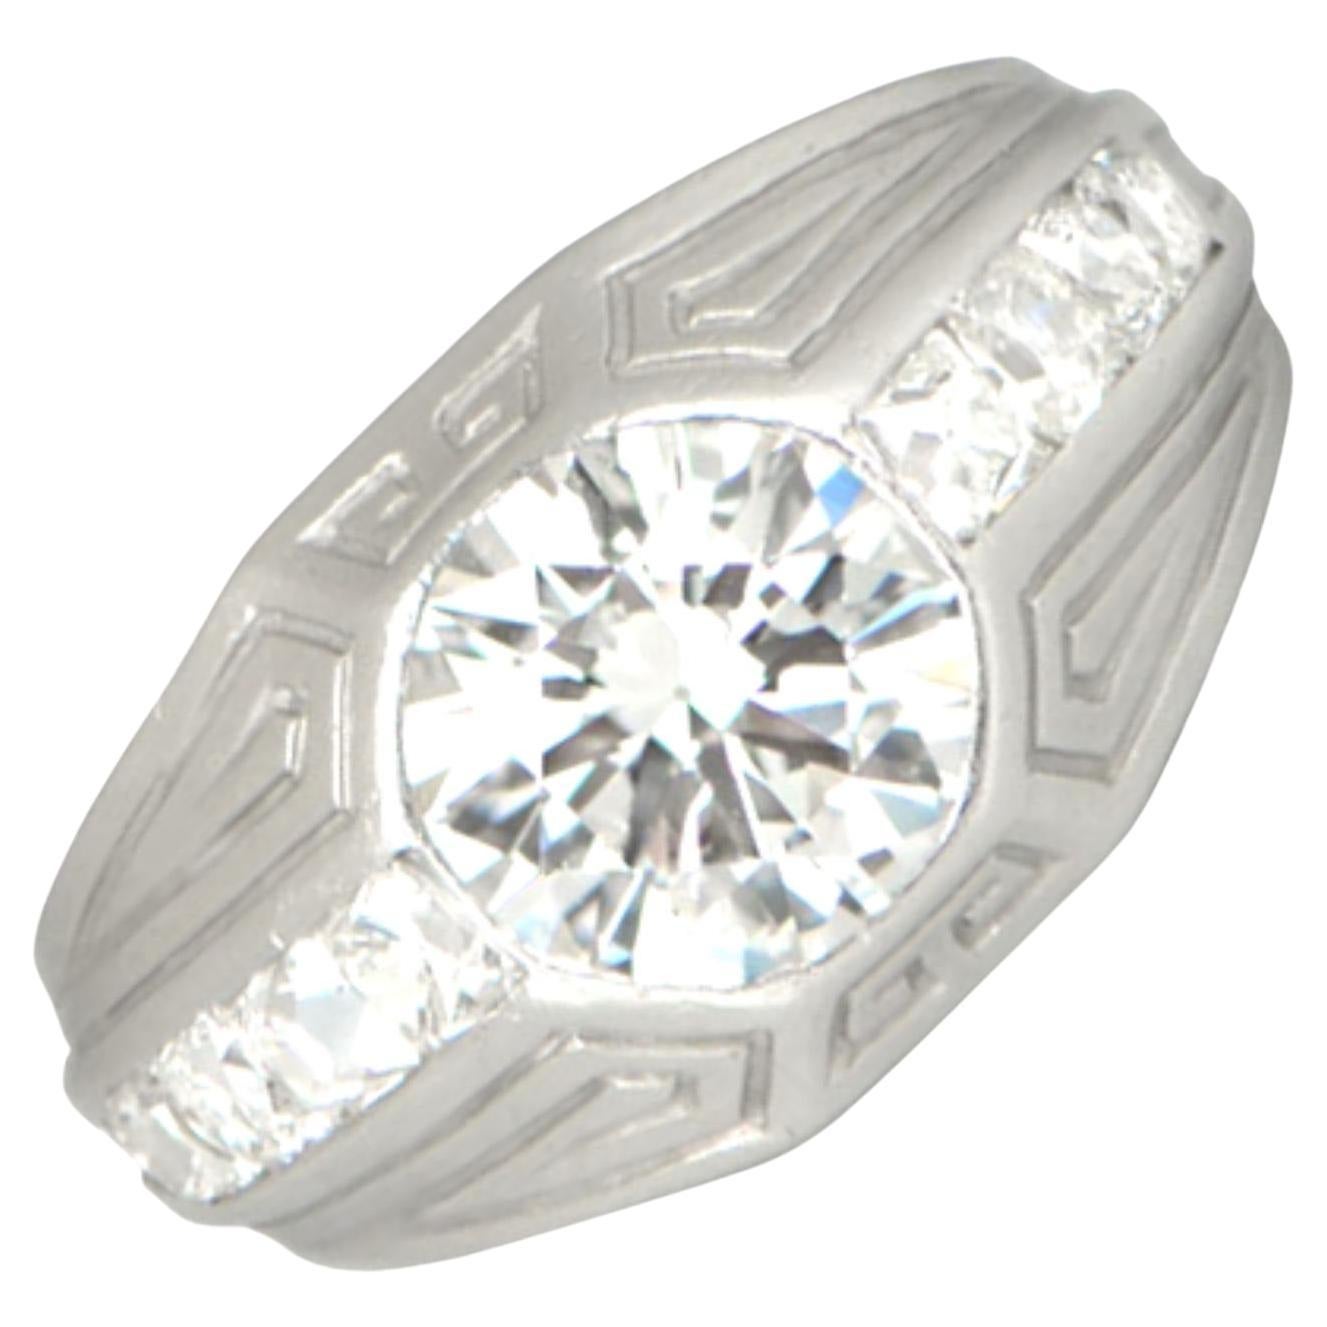 Antique 2.00 Carat Old Euro-Cut Diamond Engagement Ring, H Color, VS1 Clarity